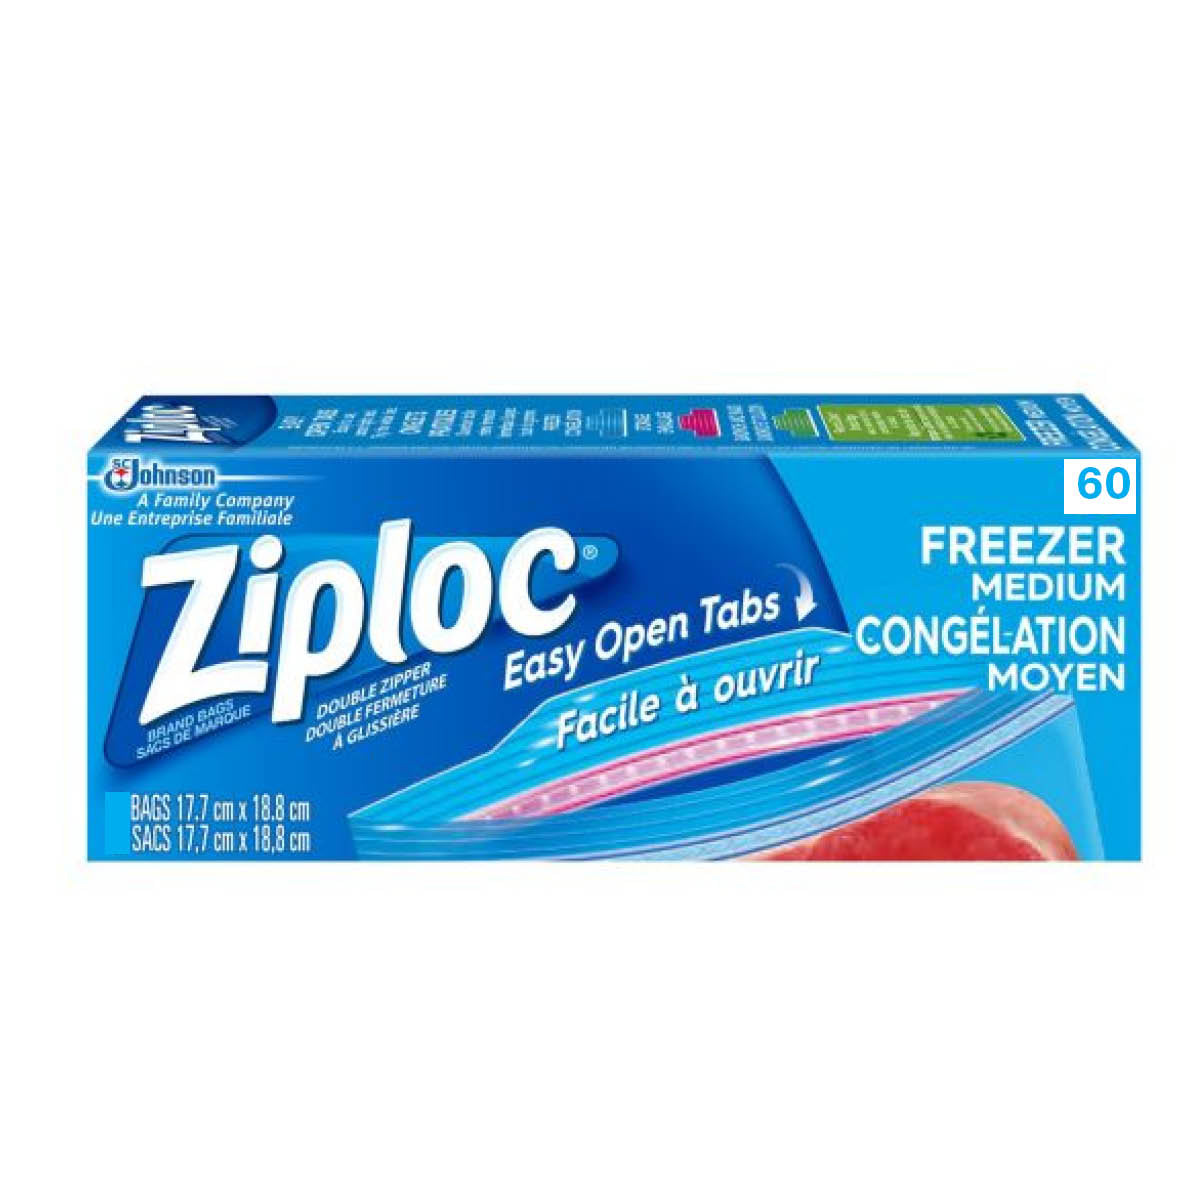 Ziploc Brand Medium Freezer Bags, 60 pack